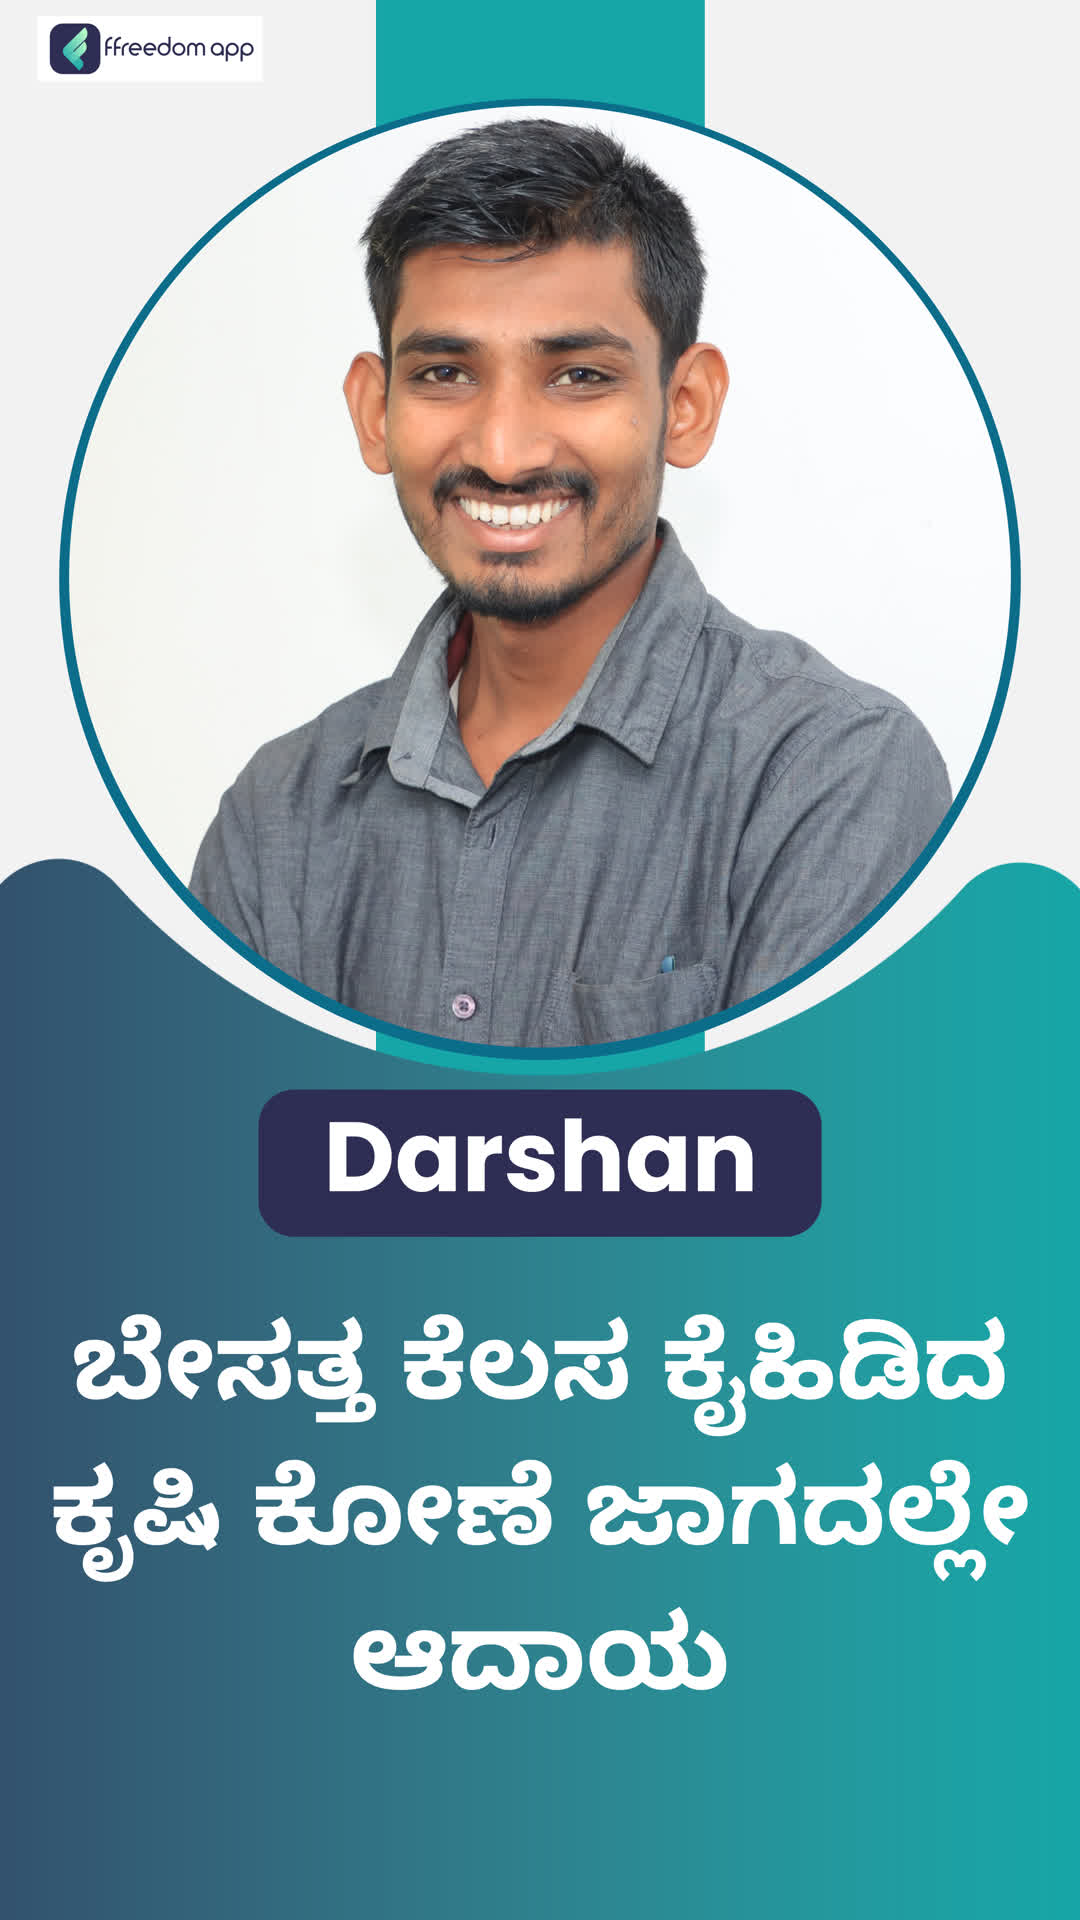 Darshan gowda's Honest Review of ffreedom app - Chitradurga ,Karnataka